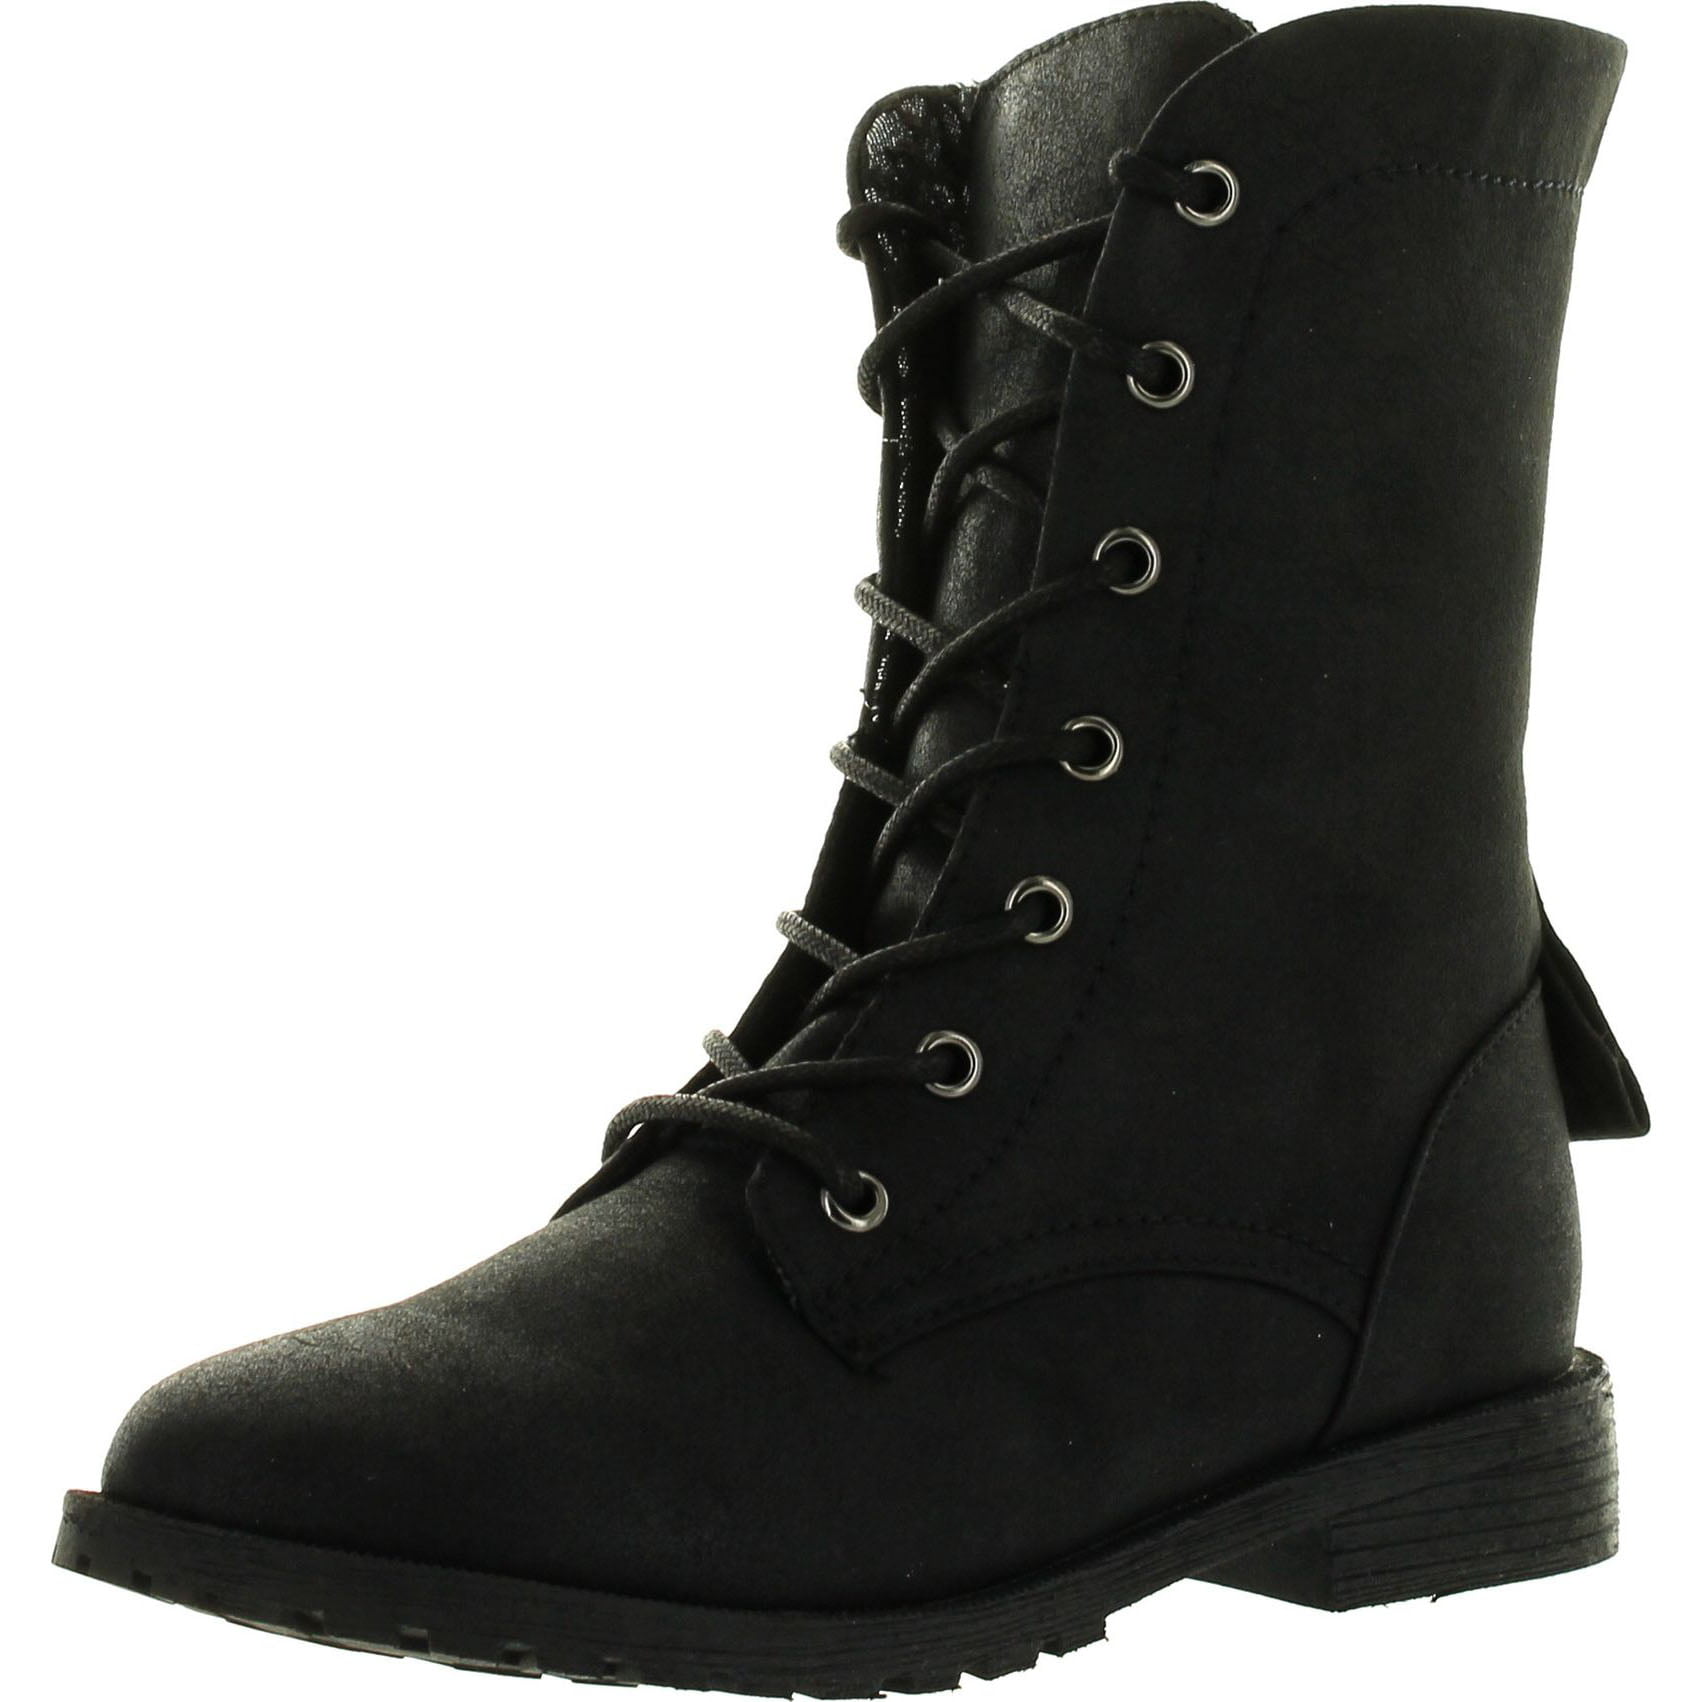 Nina Girls Coraline Fashion Boots, Black, 13 - Walmart.com